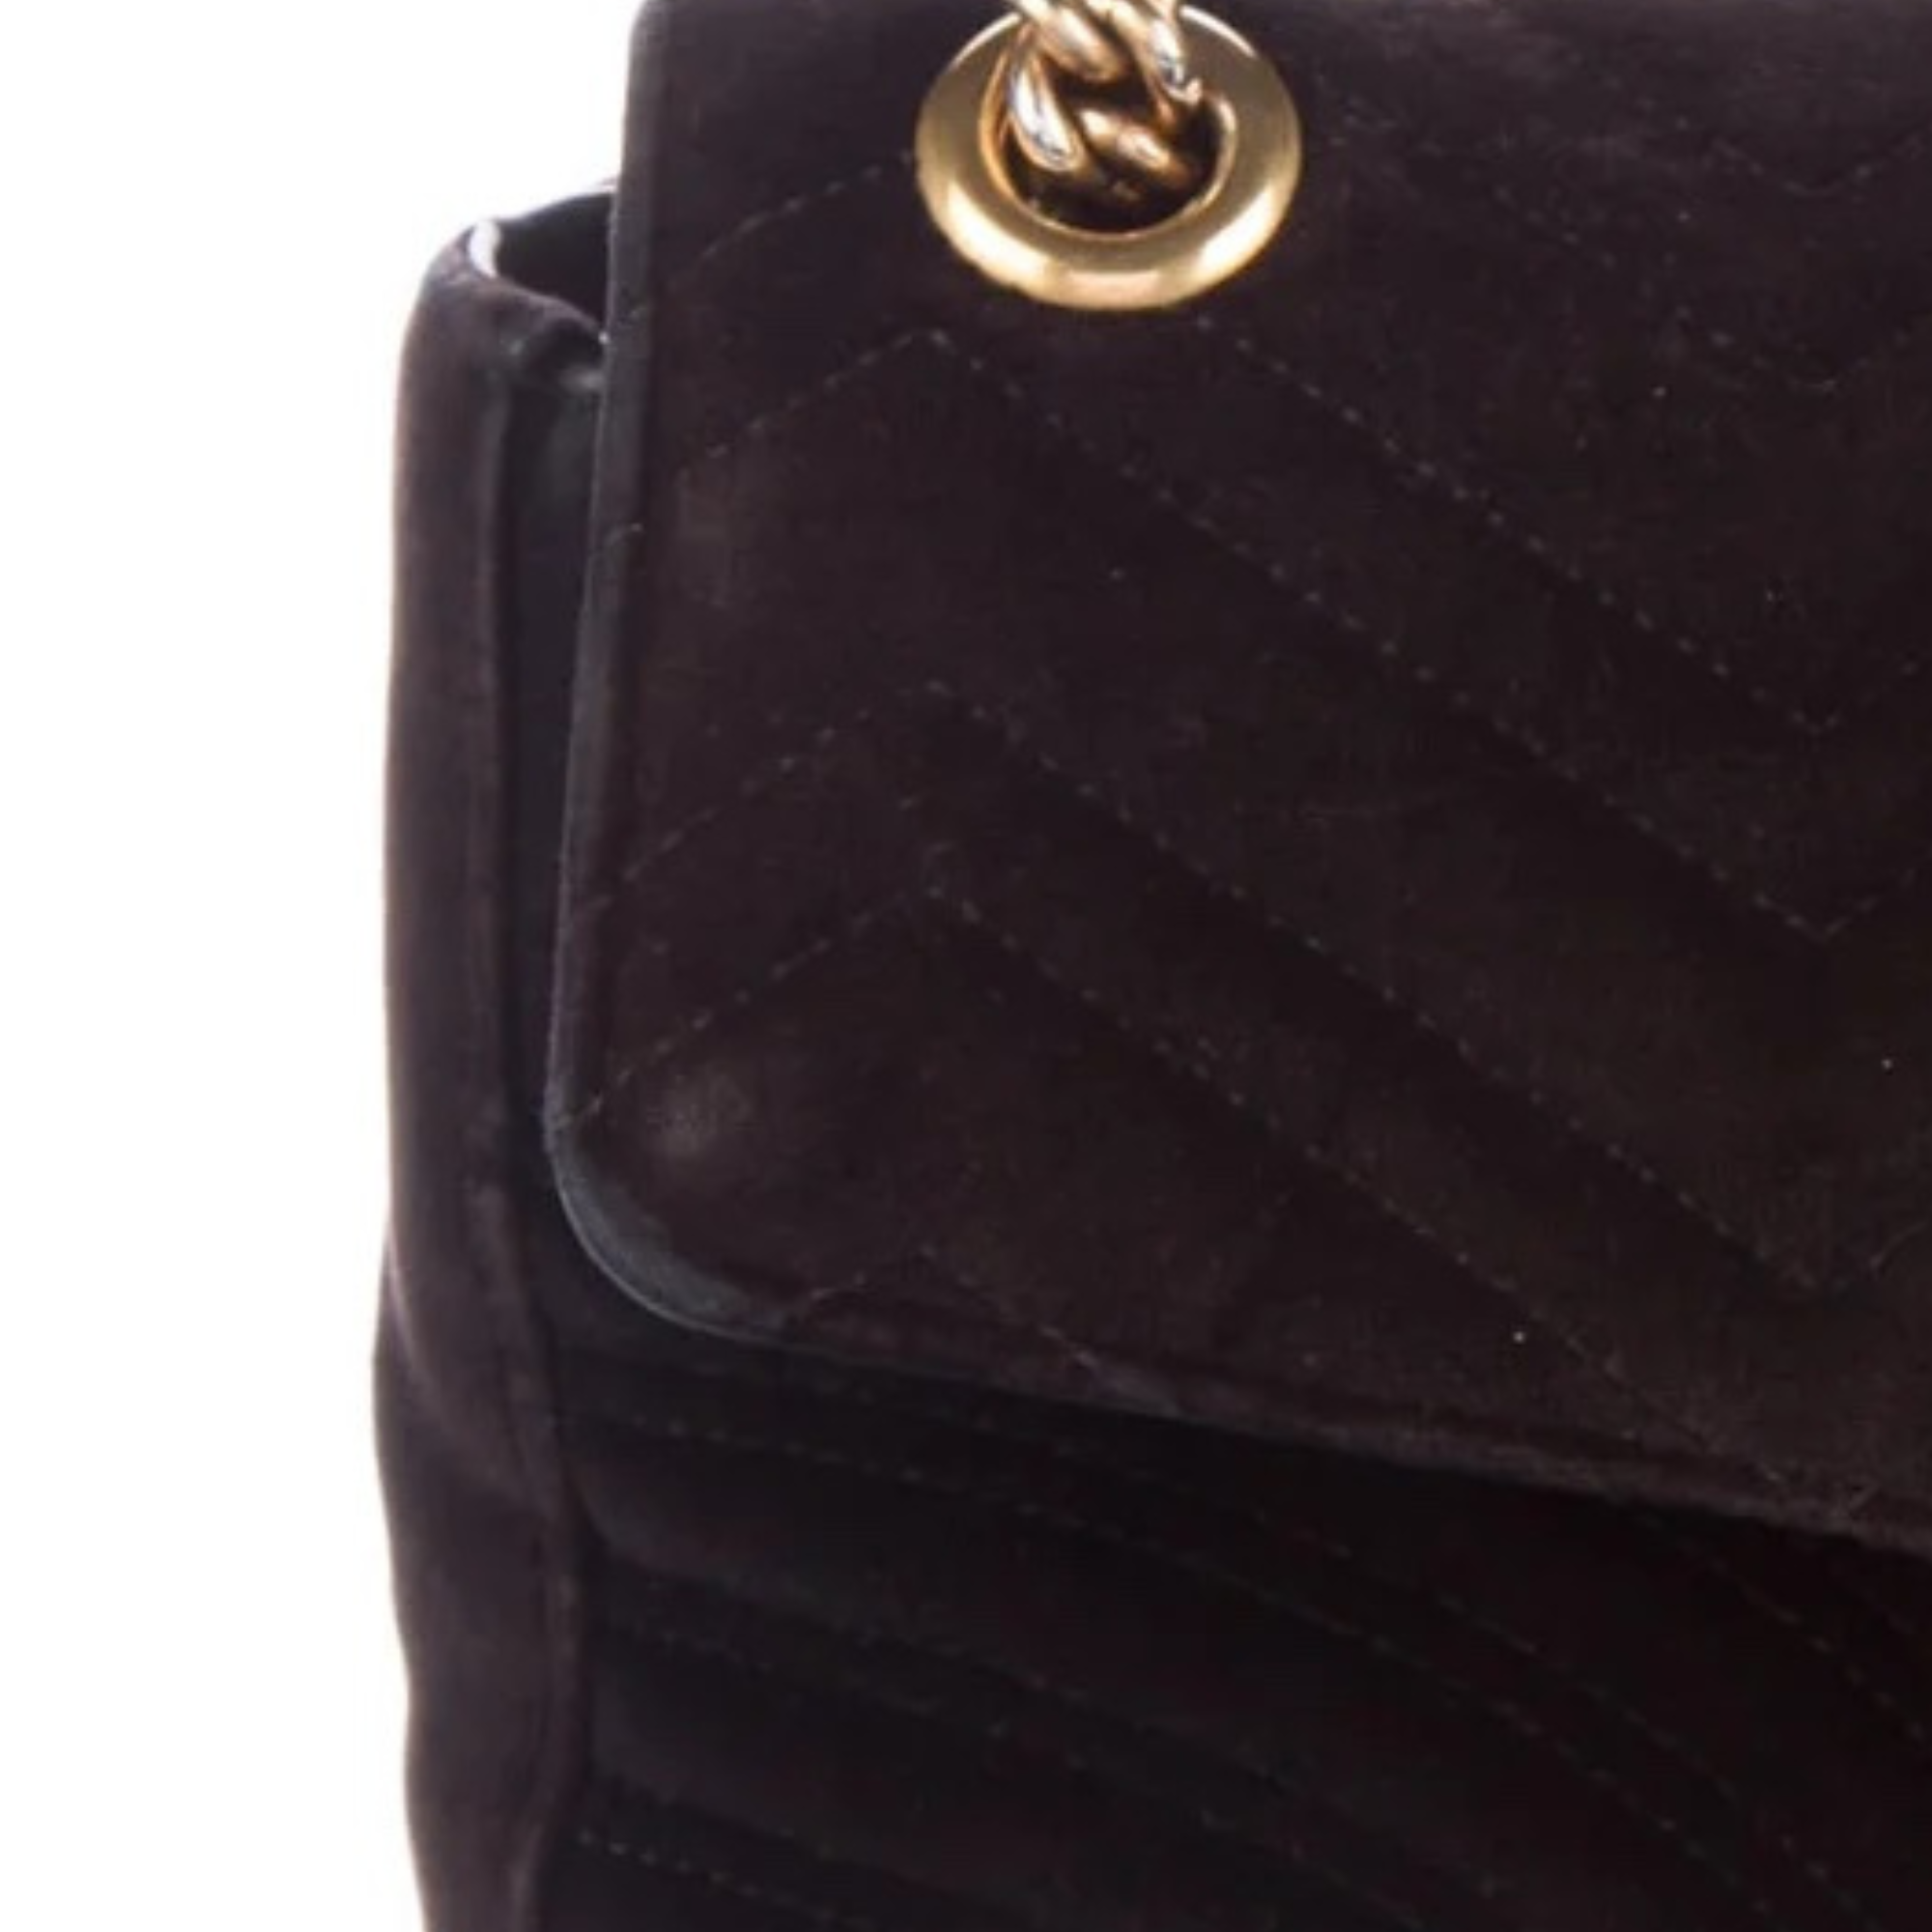 Gucci Magenta Matelassé Velvet Small GG Marmont Shoulder Bag at